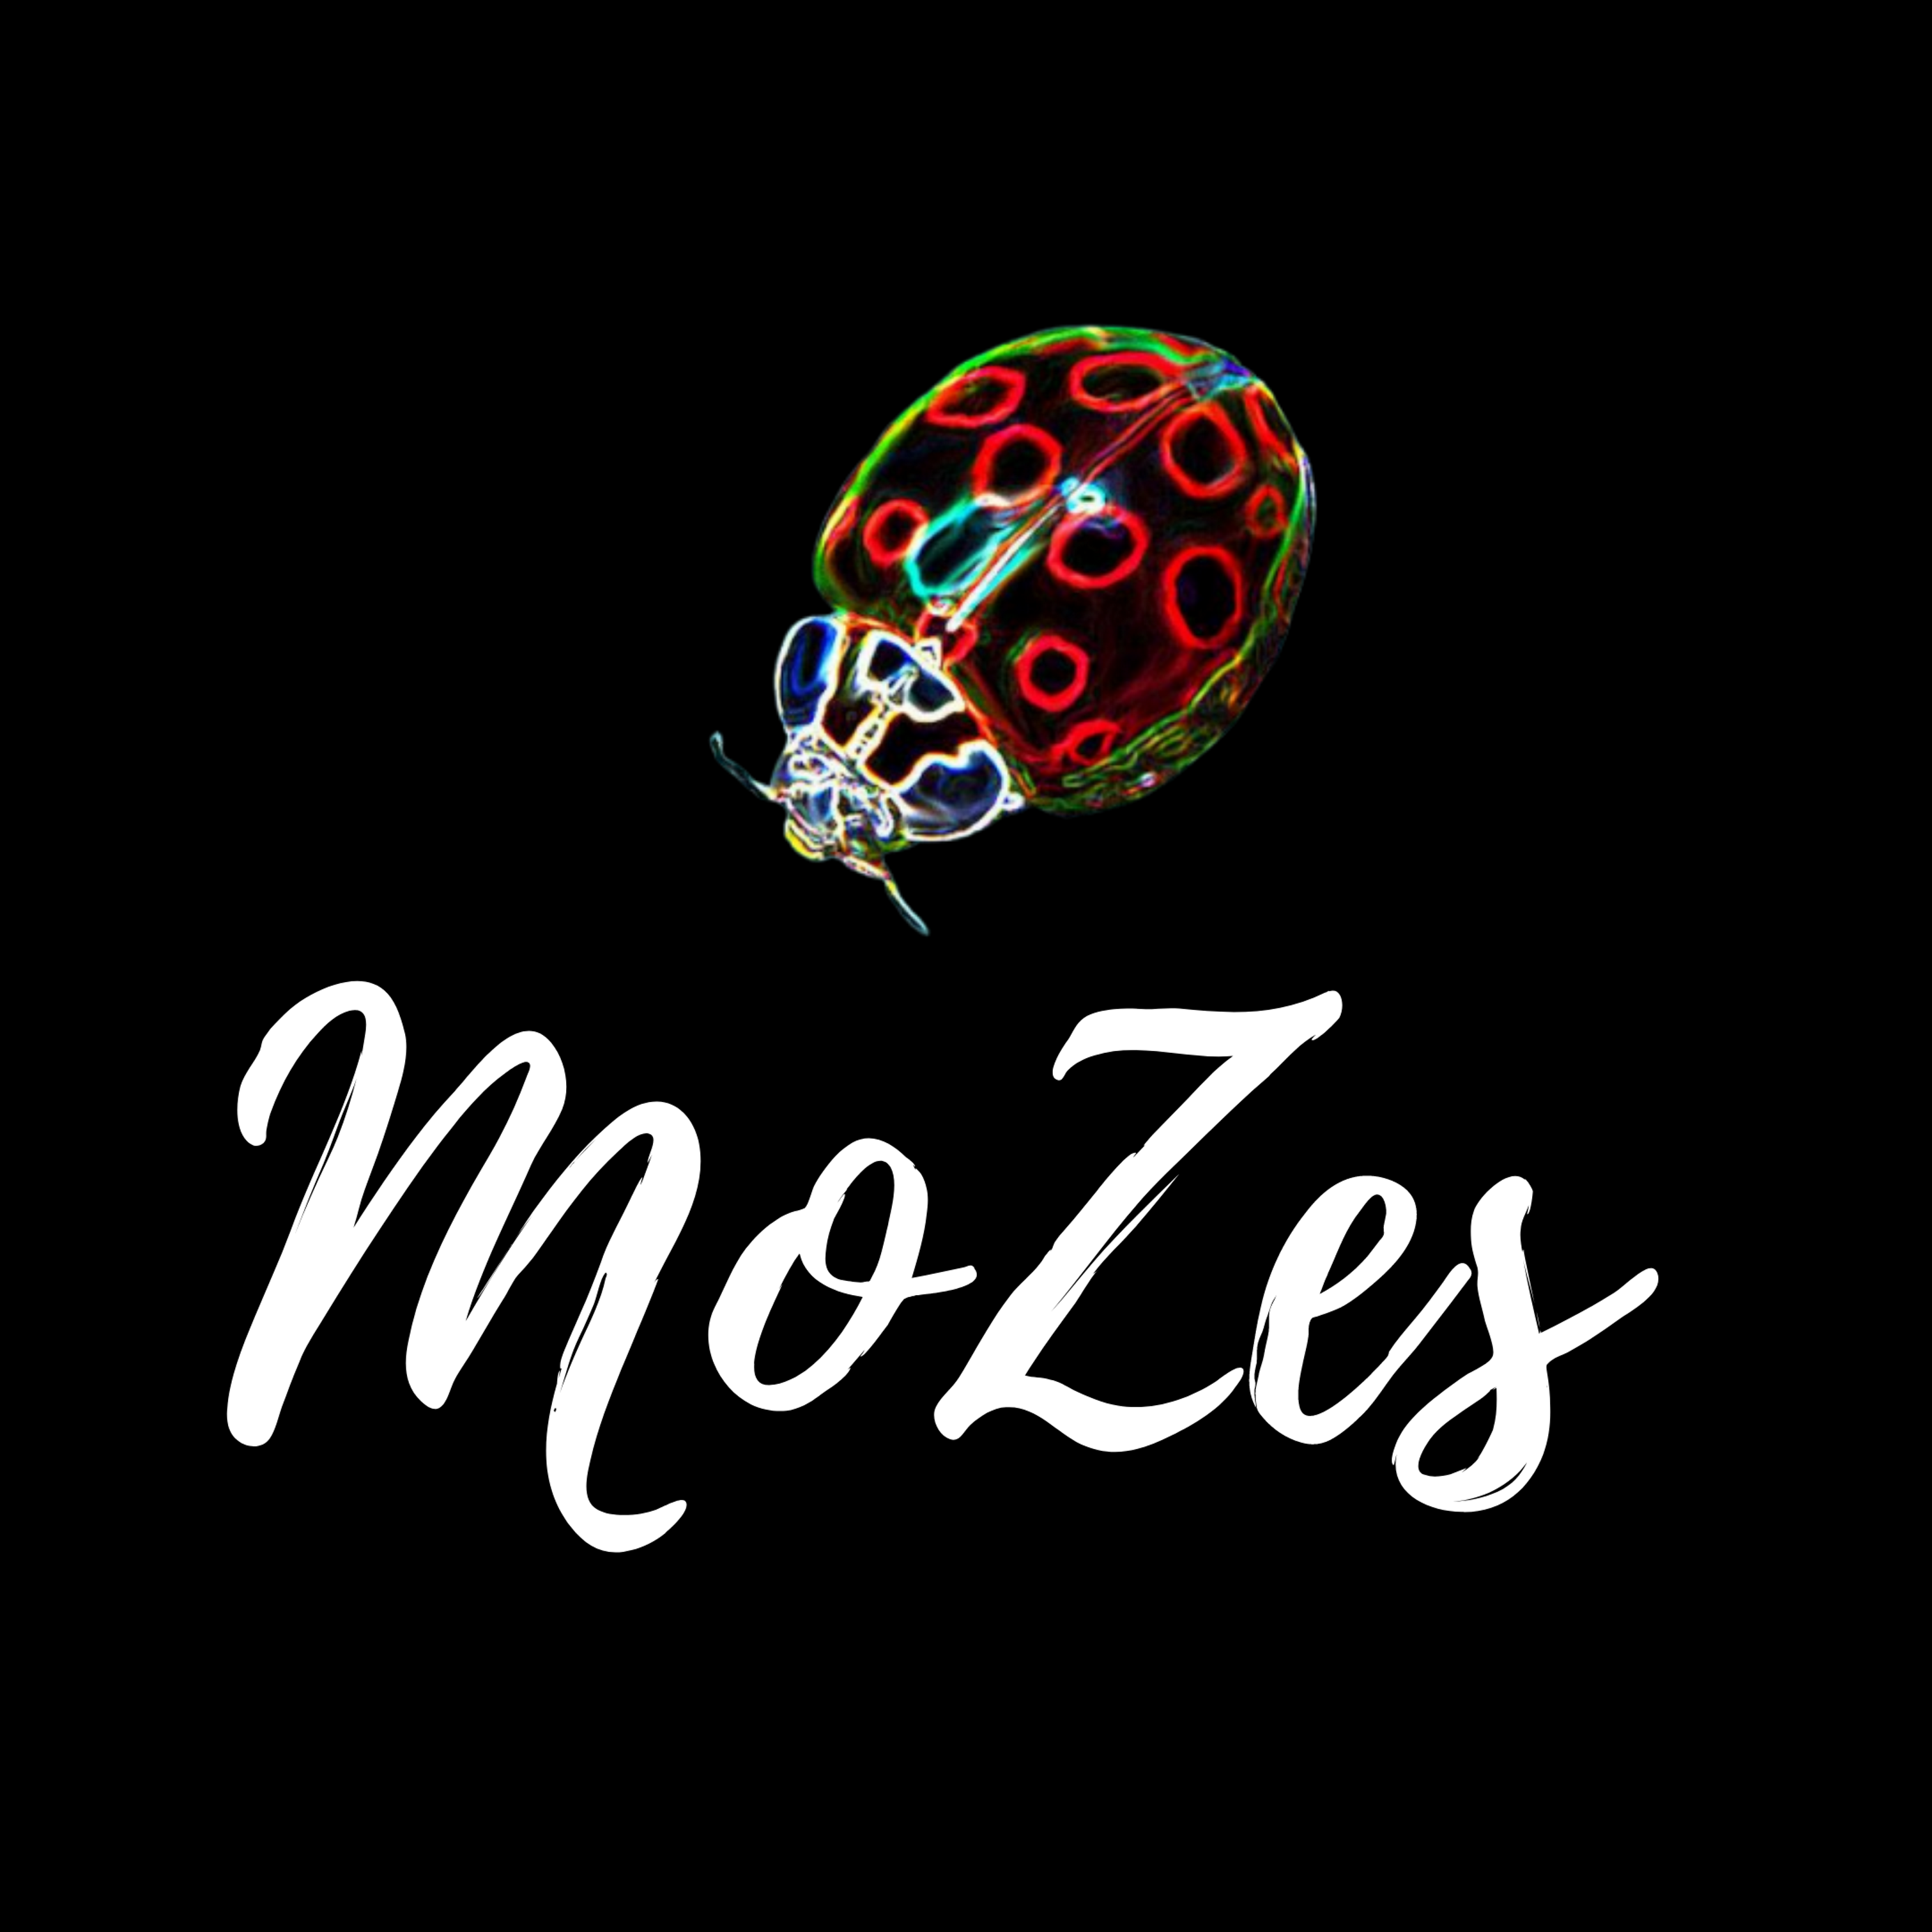 The MoZes Station